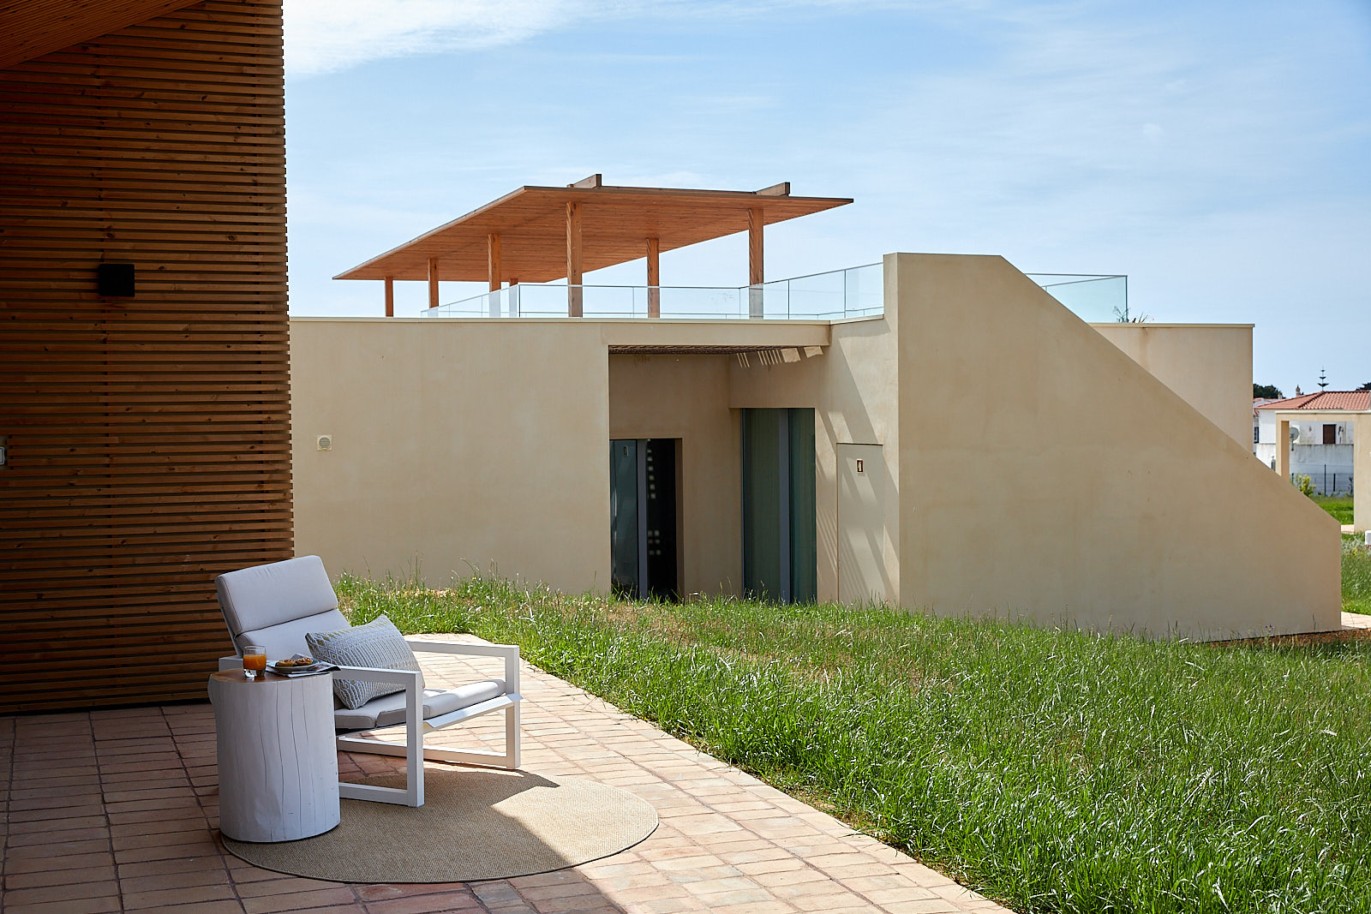 2 bedroom apartment in resort, for sale in Porches, Algarve_228805